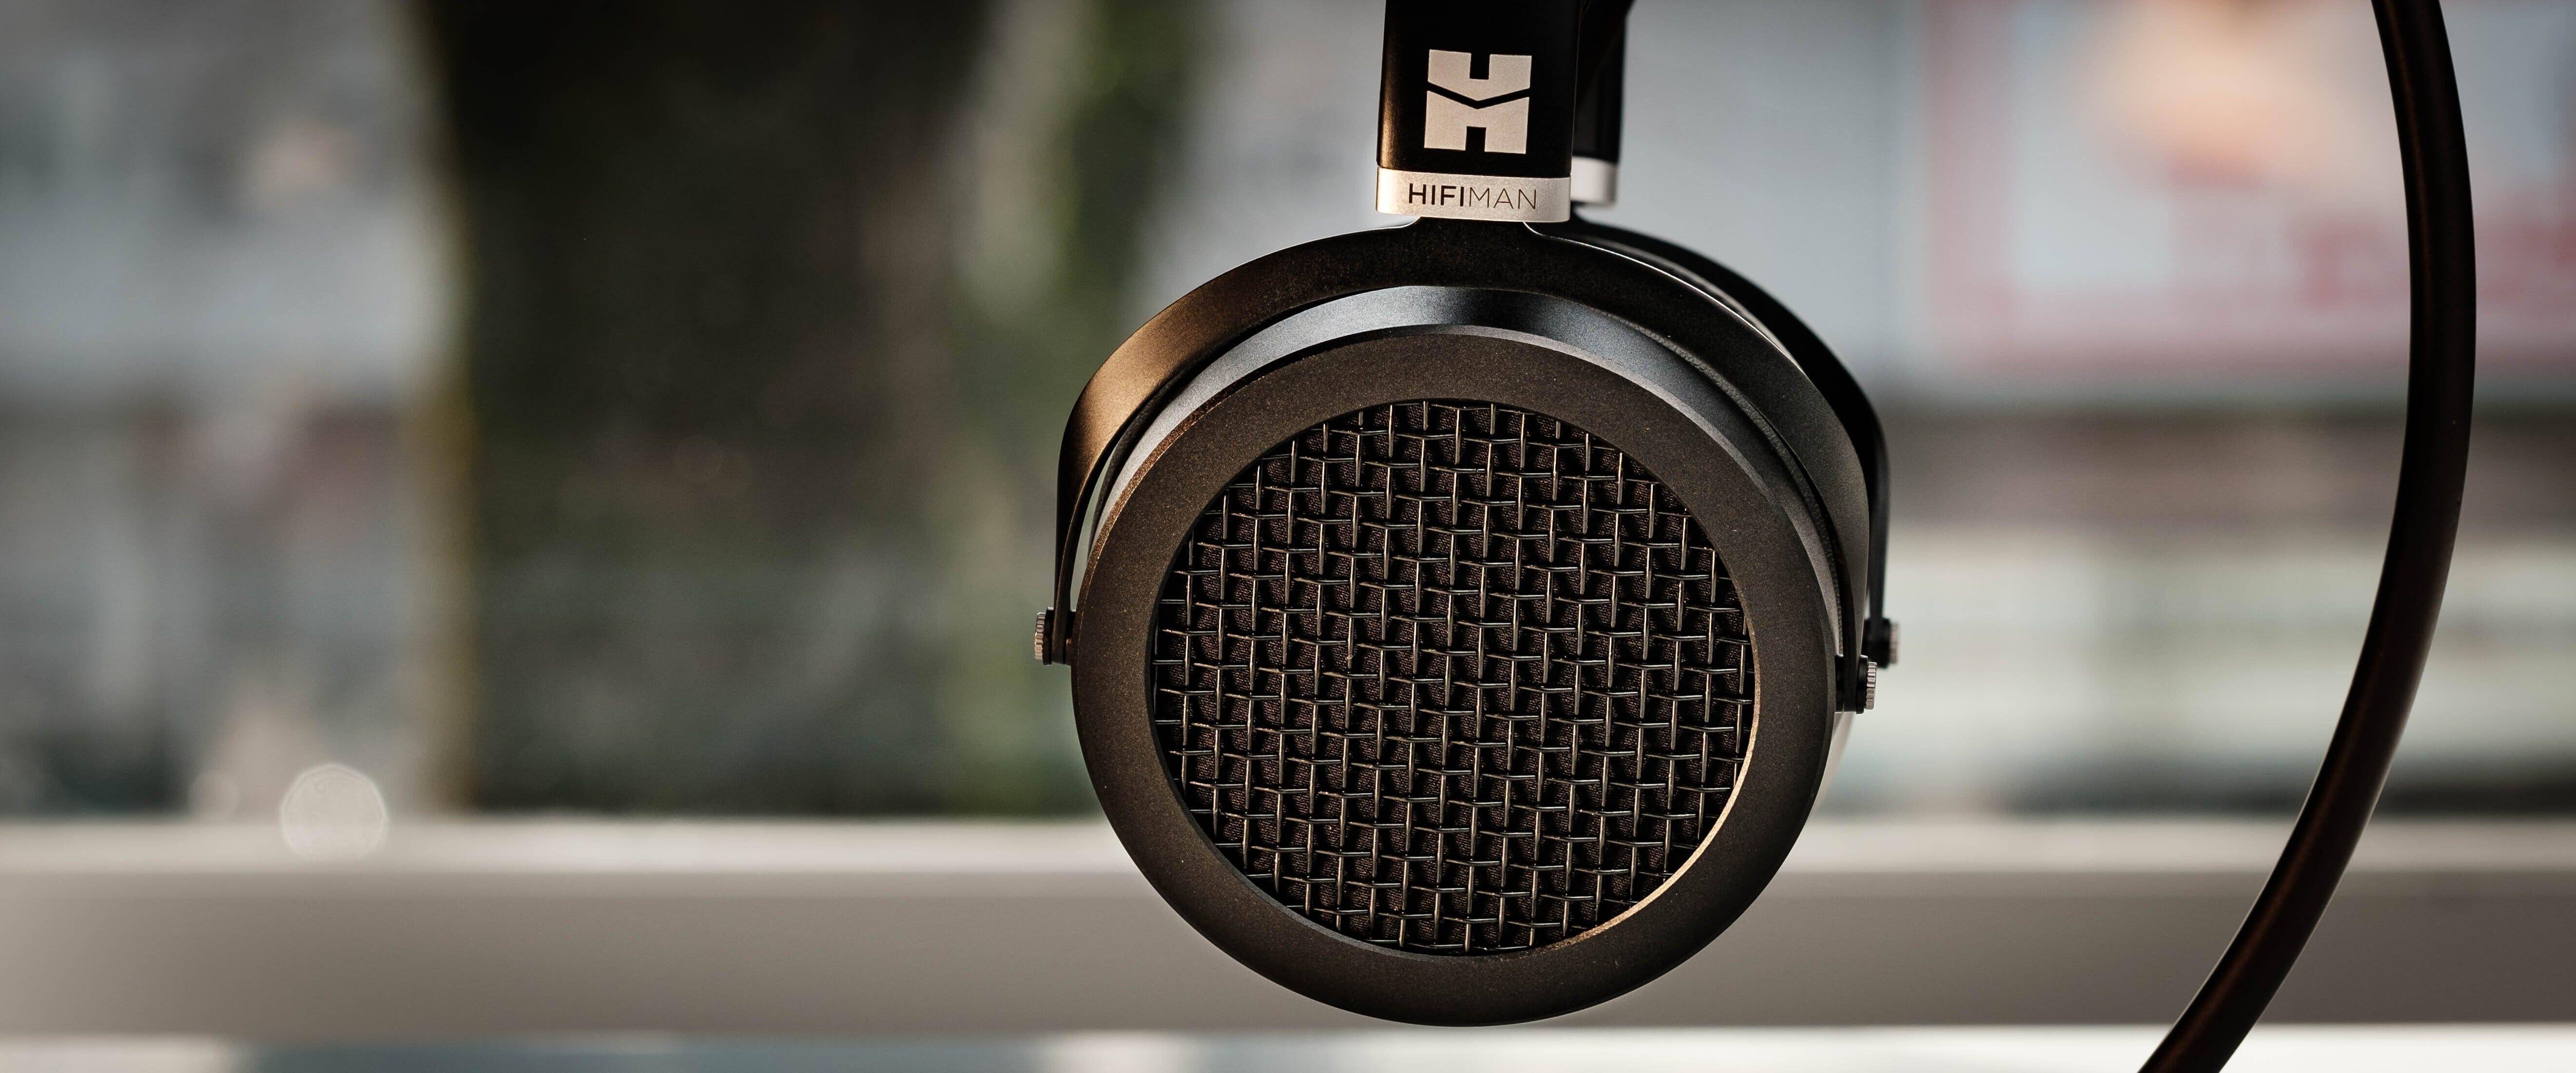 HiFiMAN Sundara Review - Best Value Headphone? – Headphones